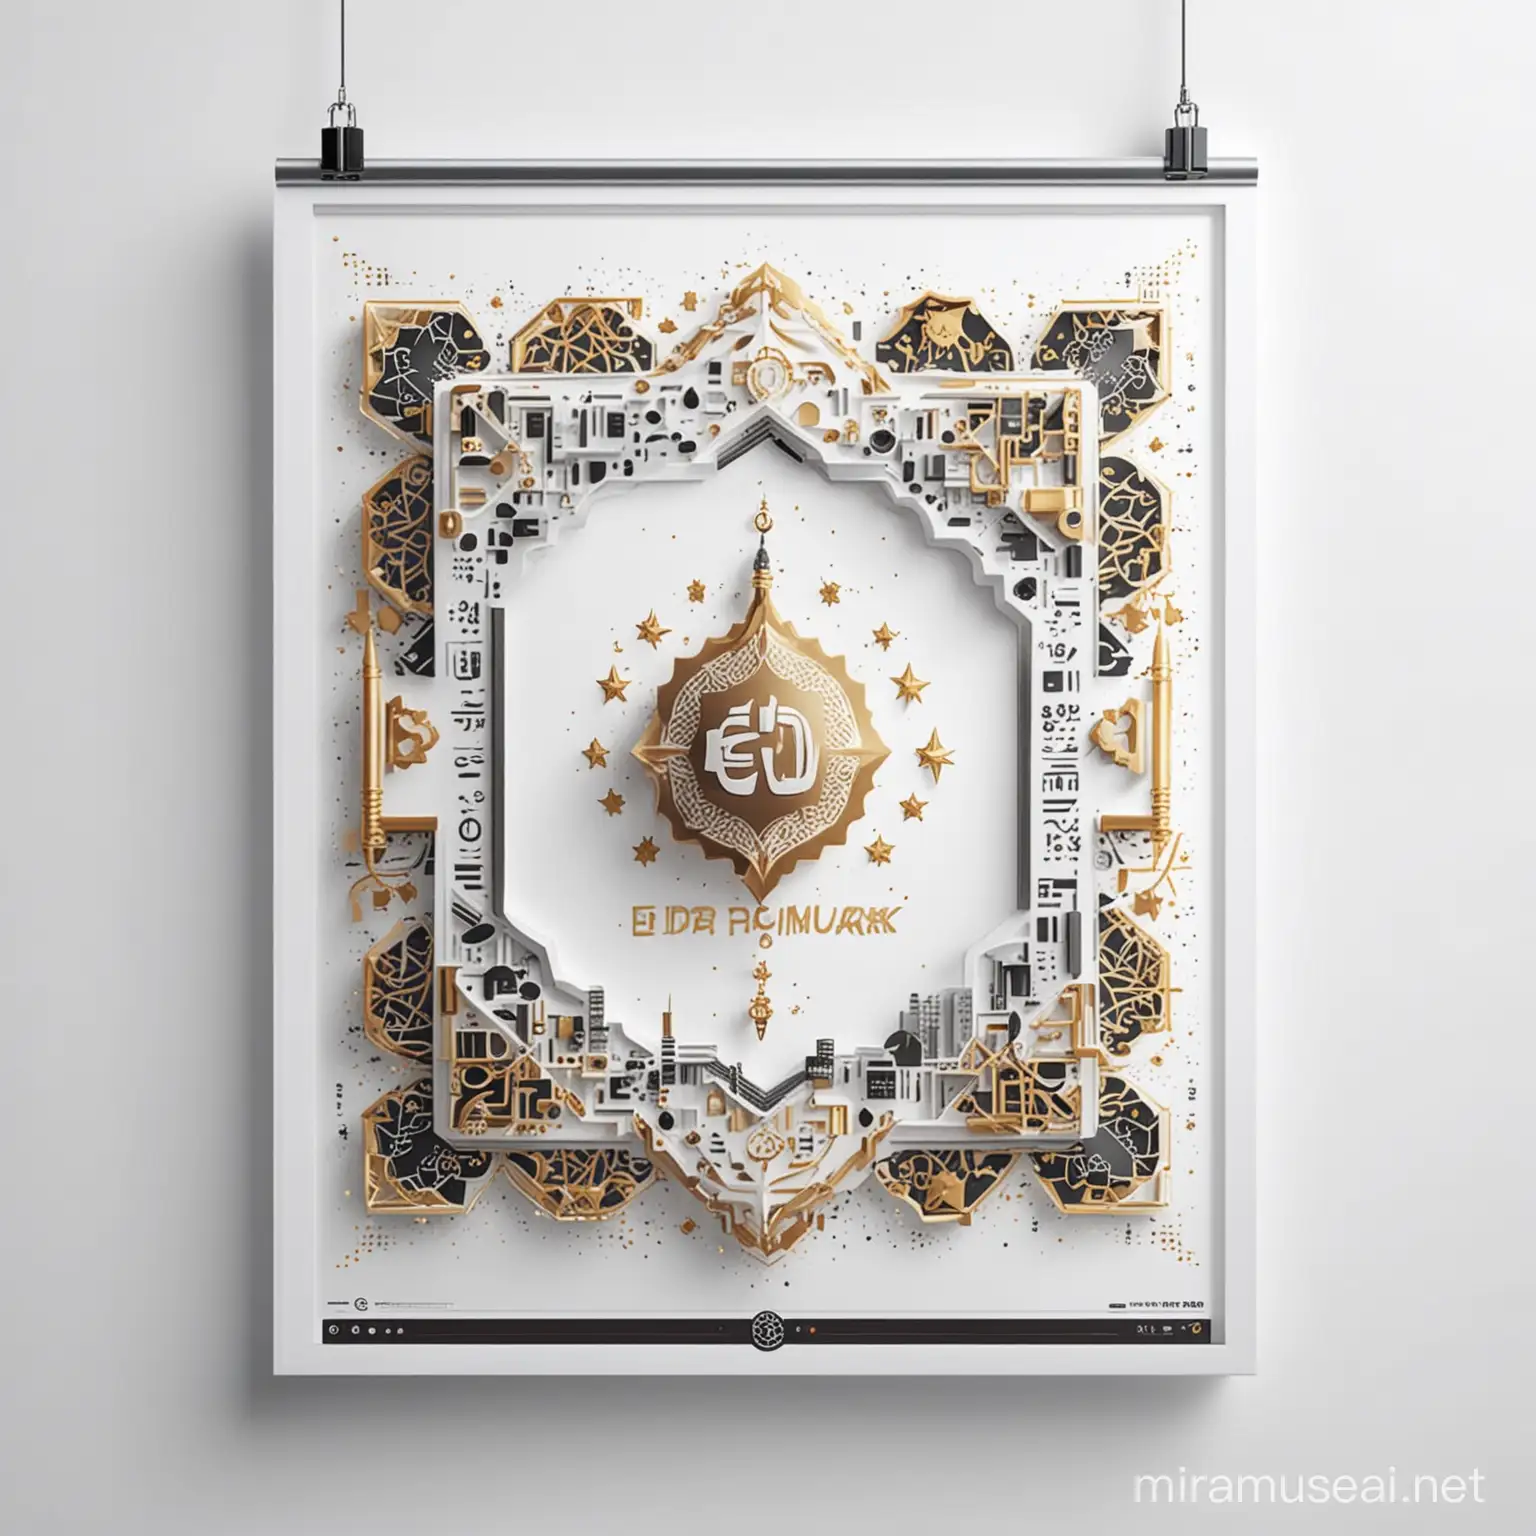 Eid Mubarak Technology Poster on White Background